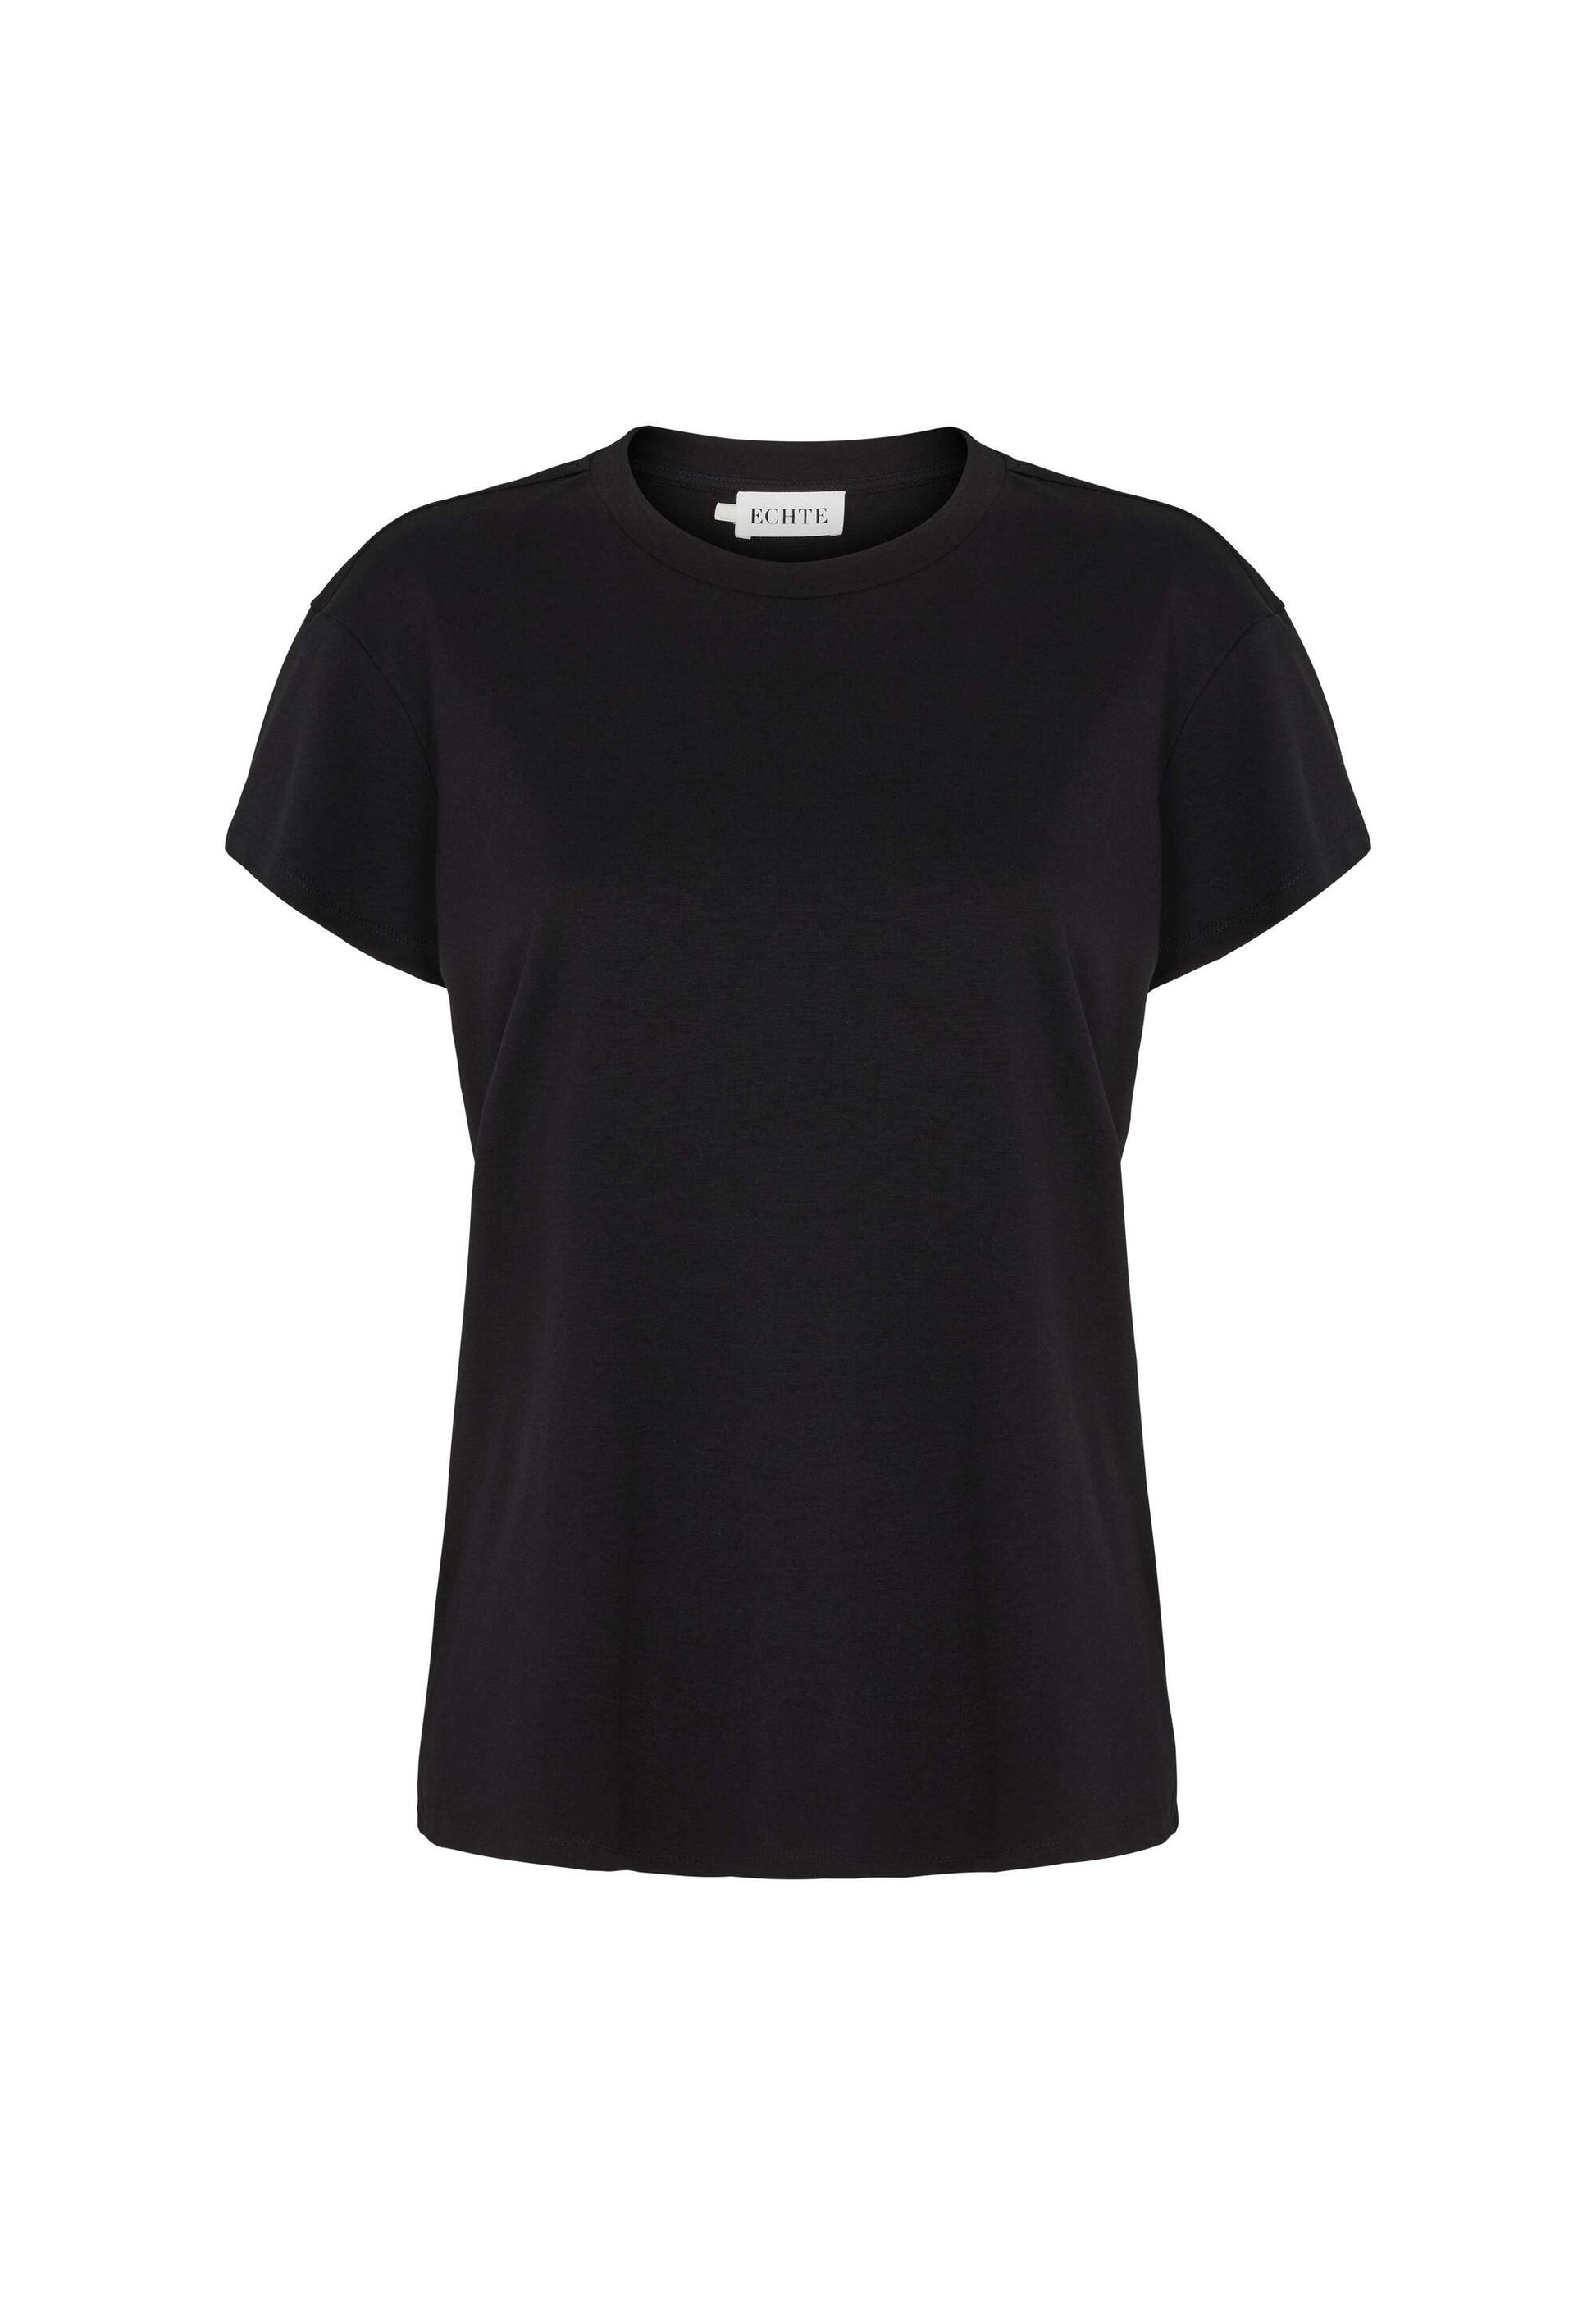 ECHTE SS T-shirt, T-shirts T-Shirts 01000 Black